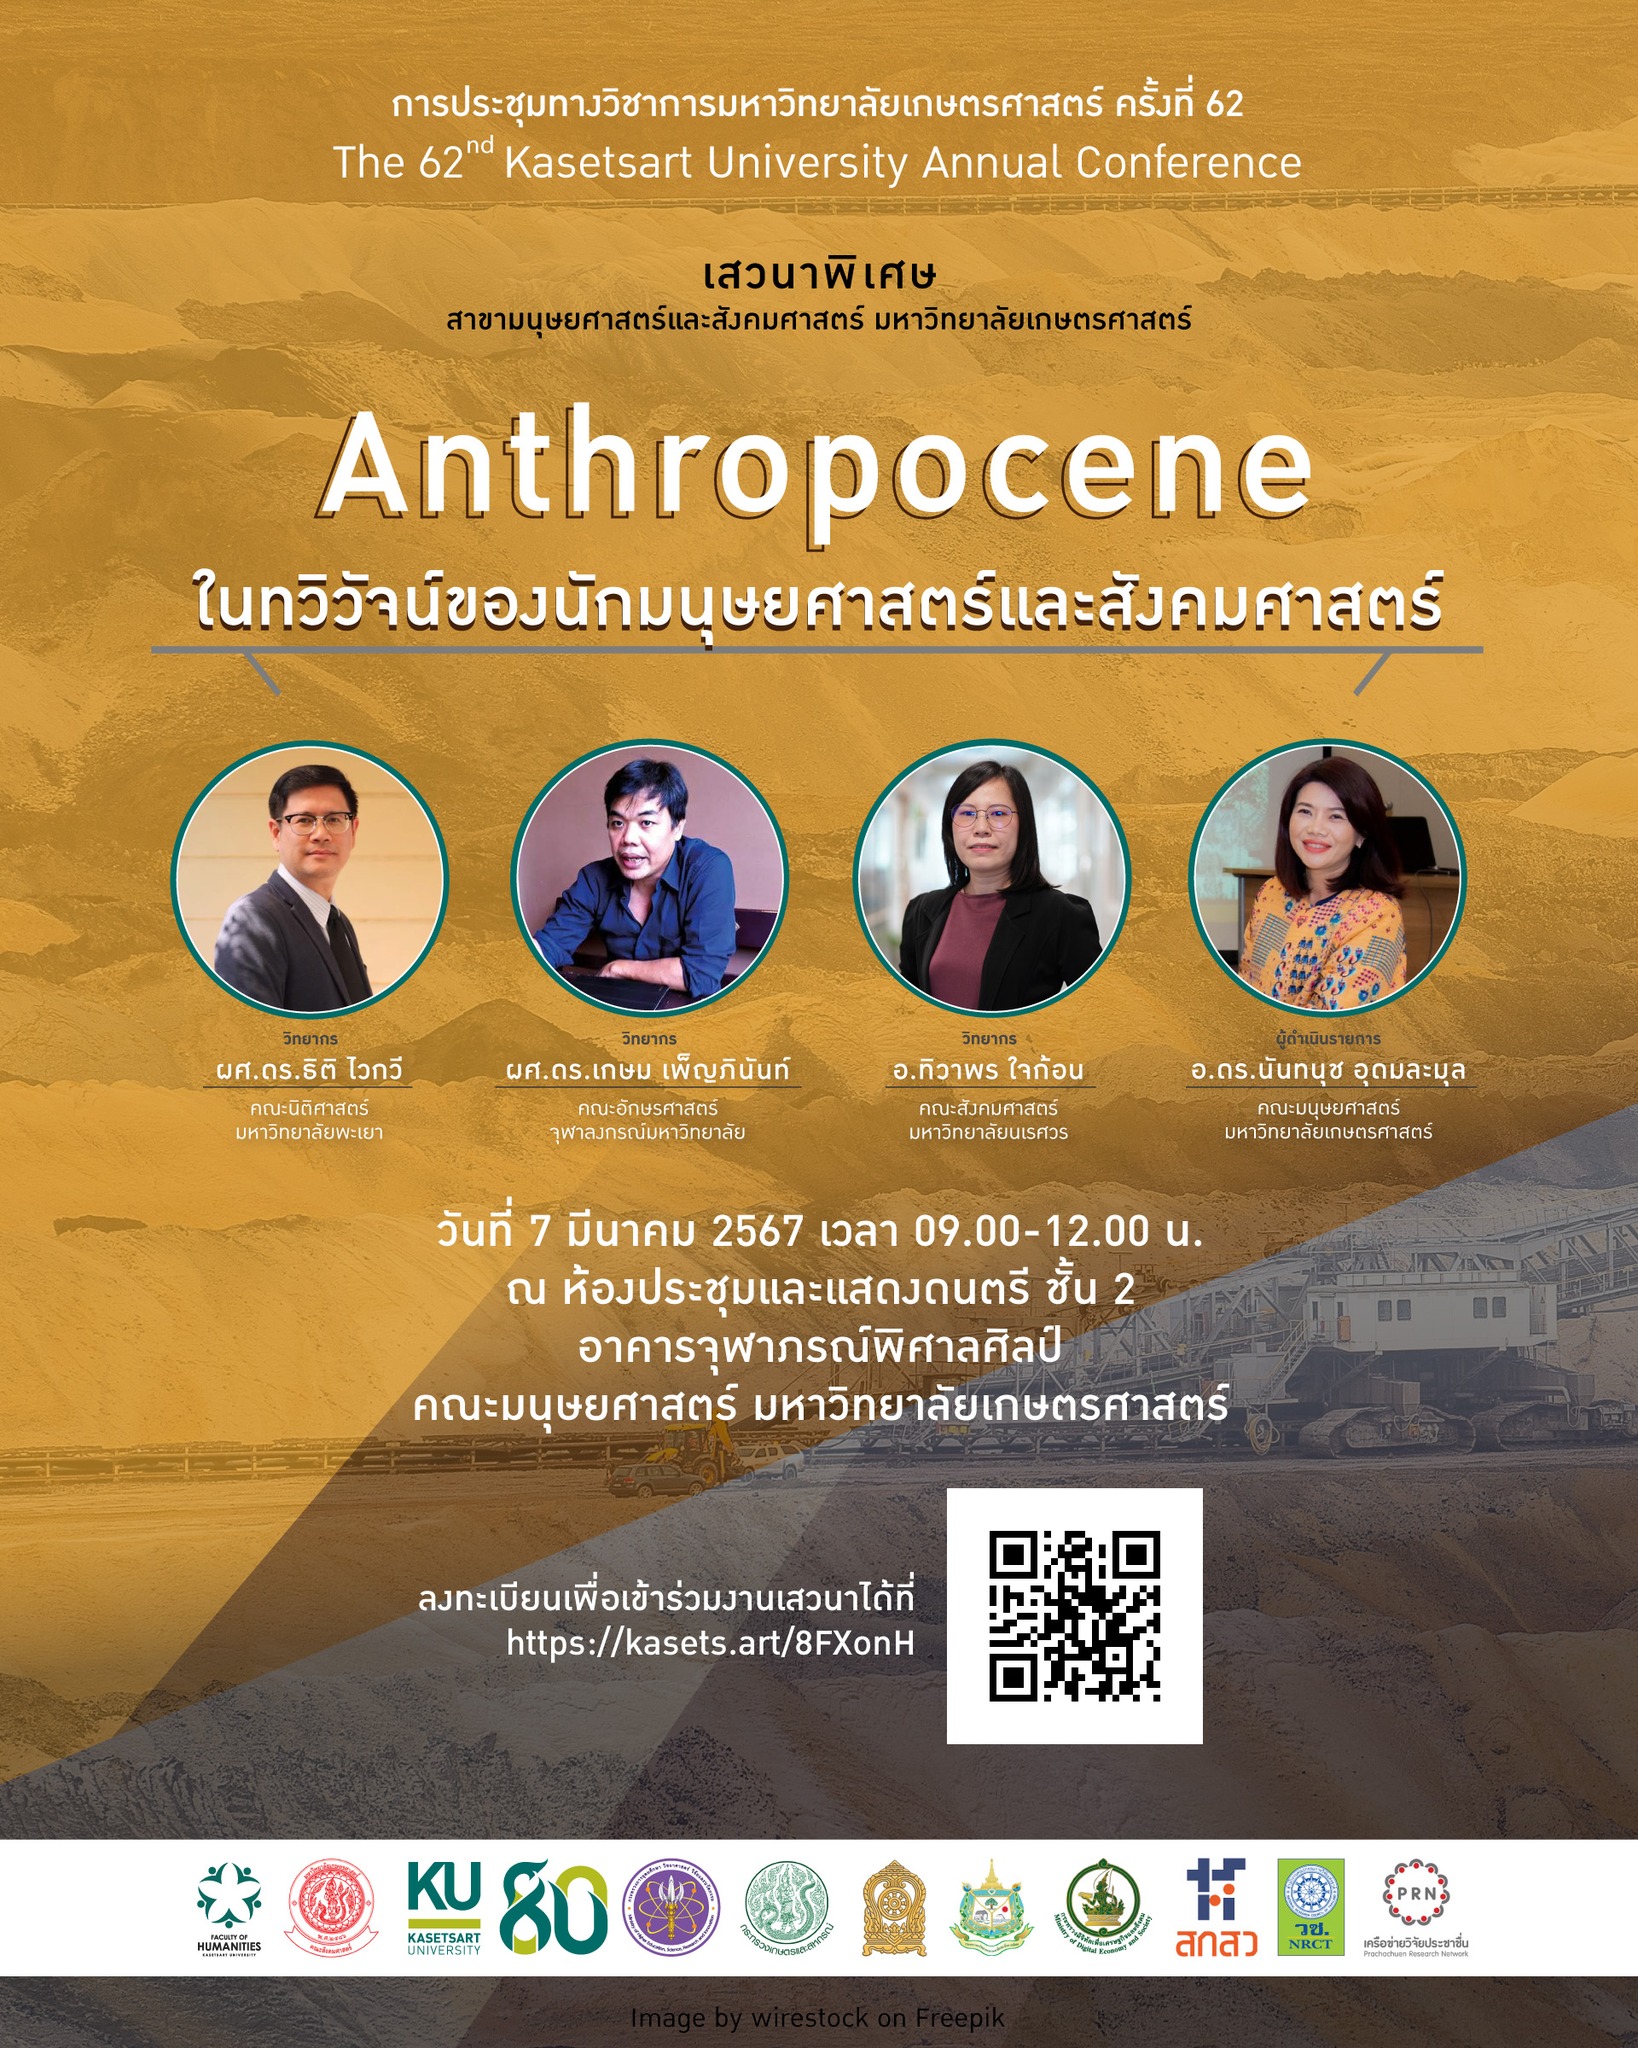 Featured image for “Anthropocene ในทวิวัจน์ของนักมนุษยศาสตร์และสังคมศาสตร์”